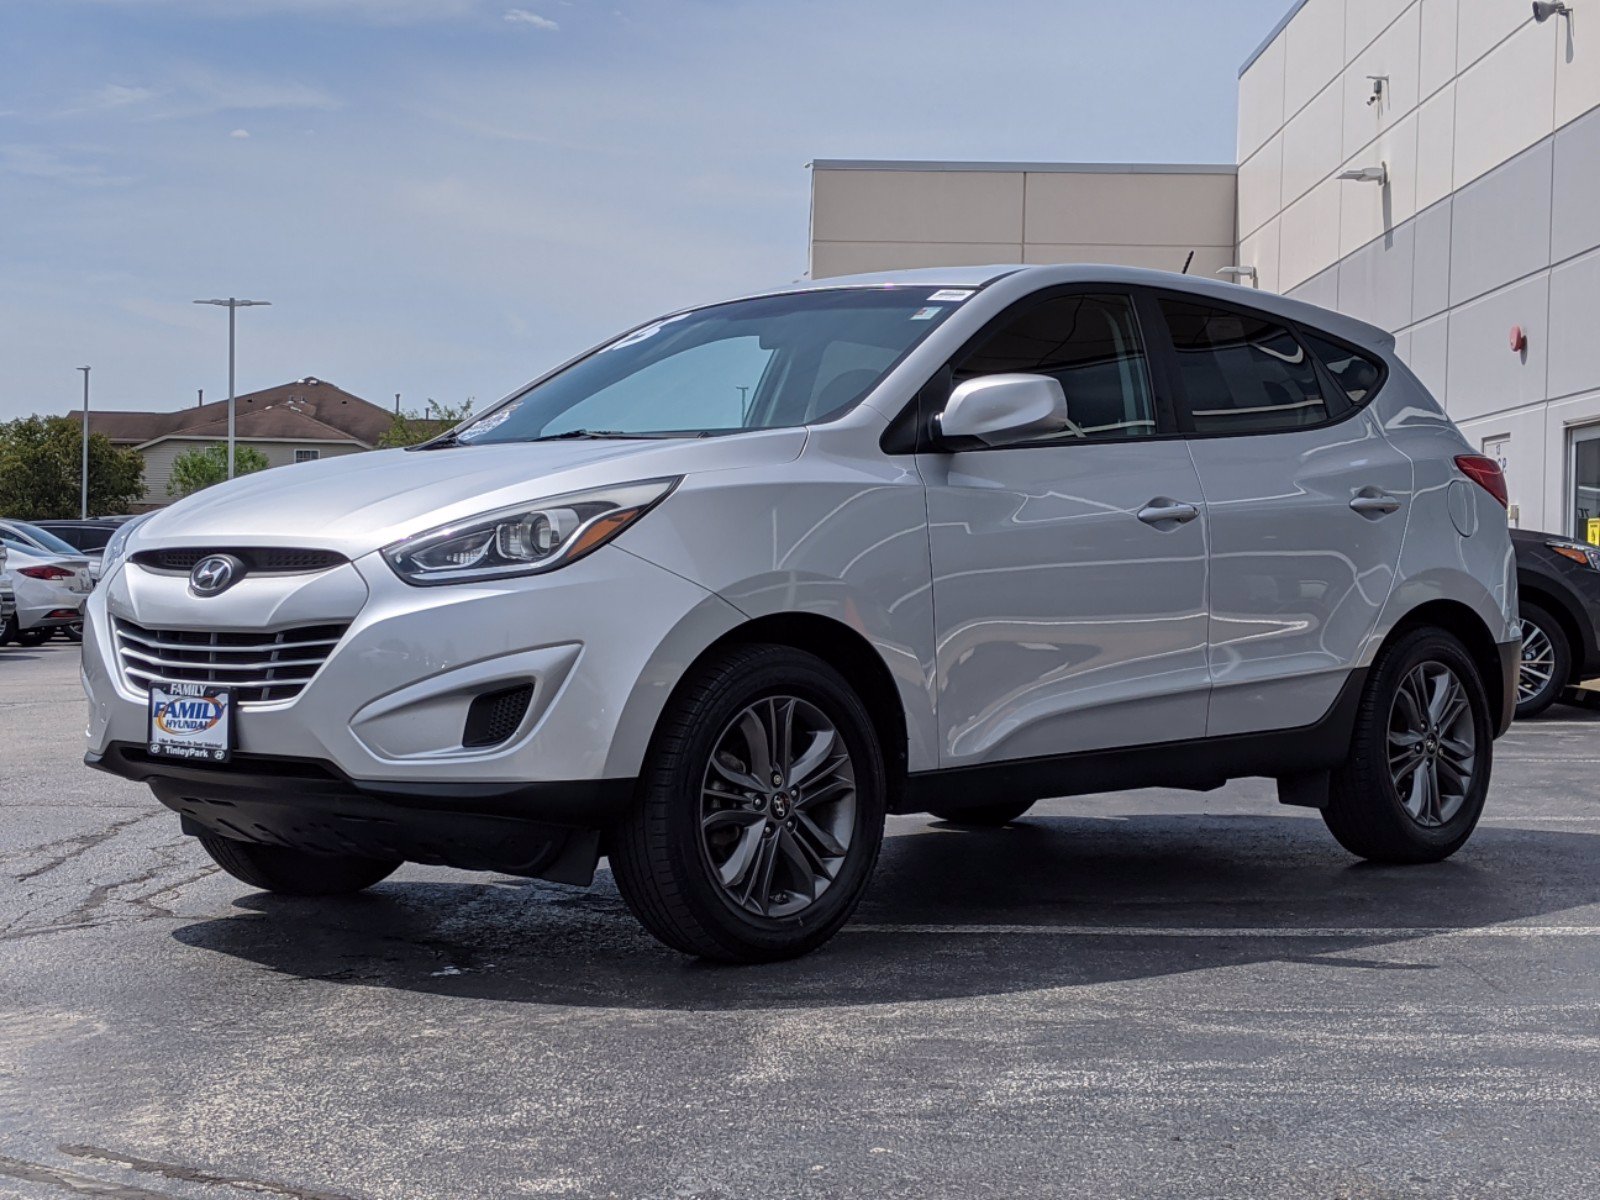 Hyundai Tucson 2022 Price